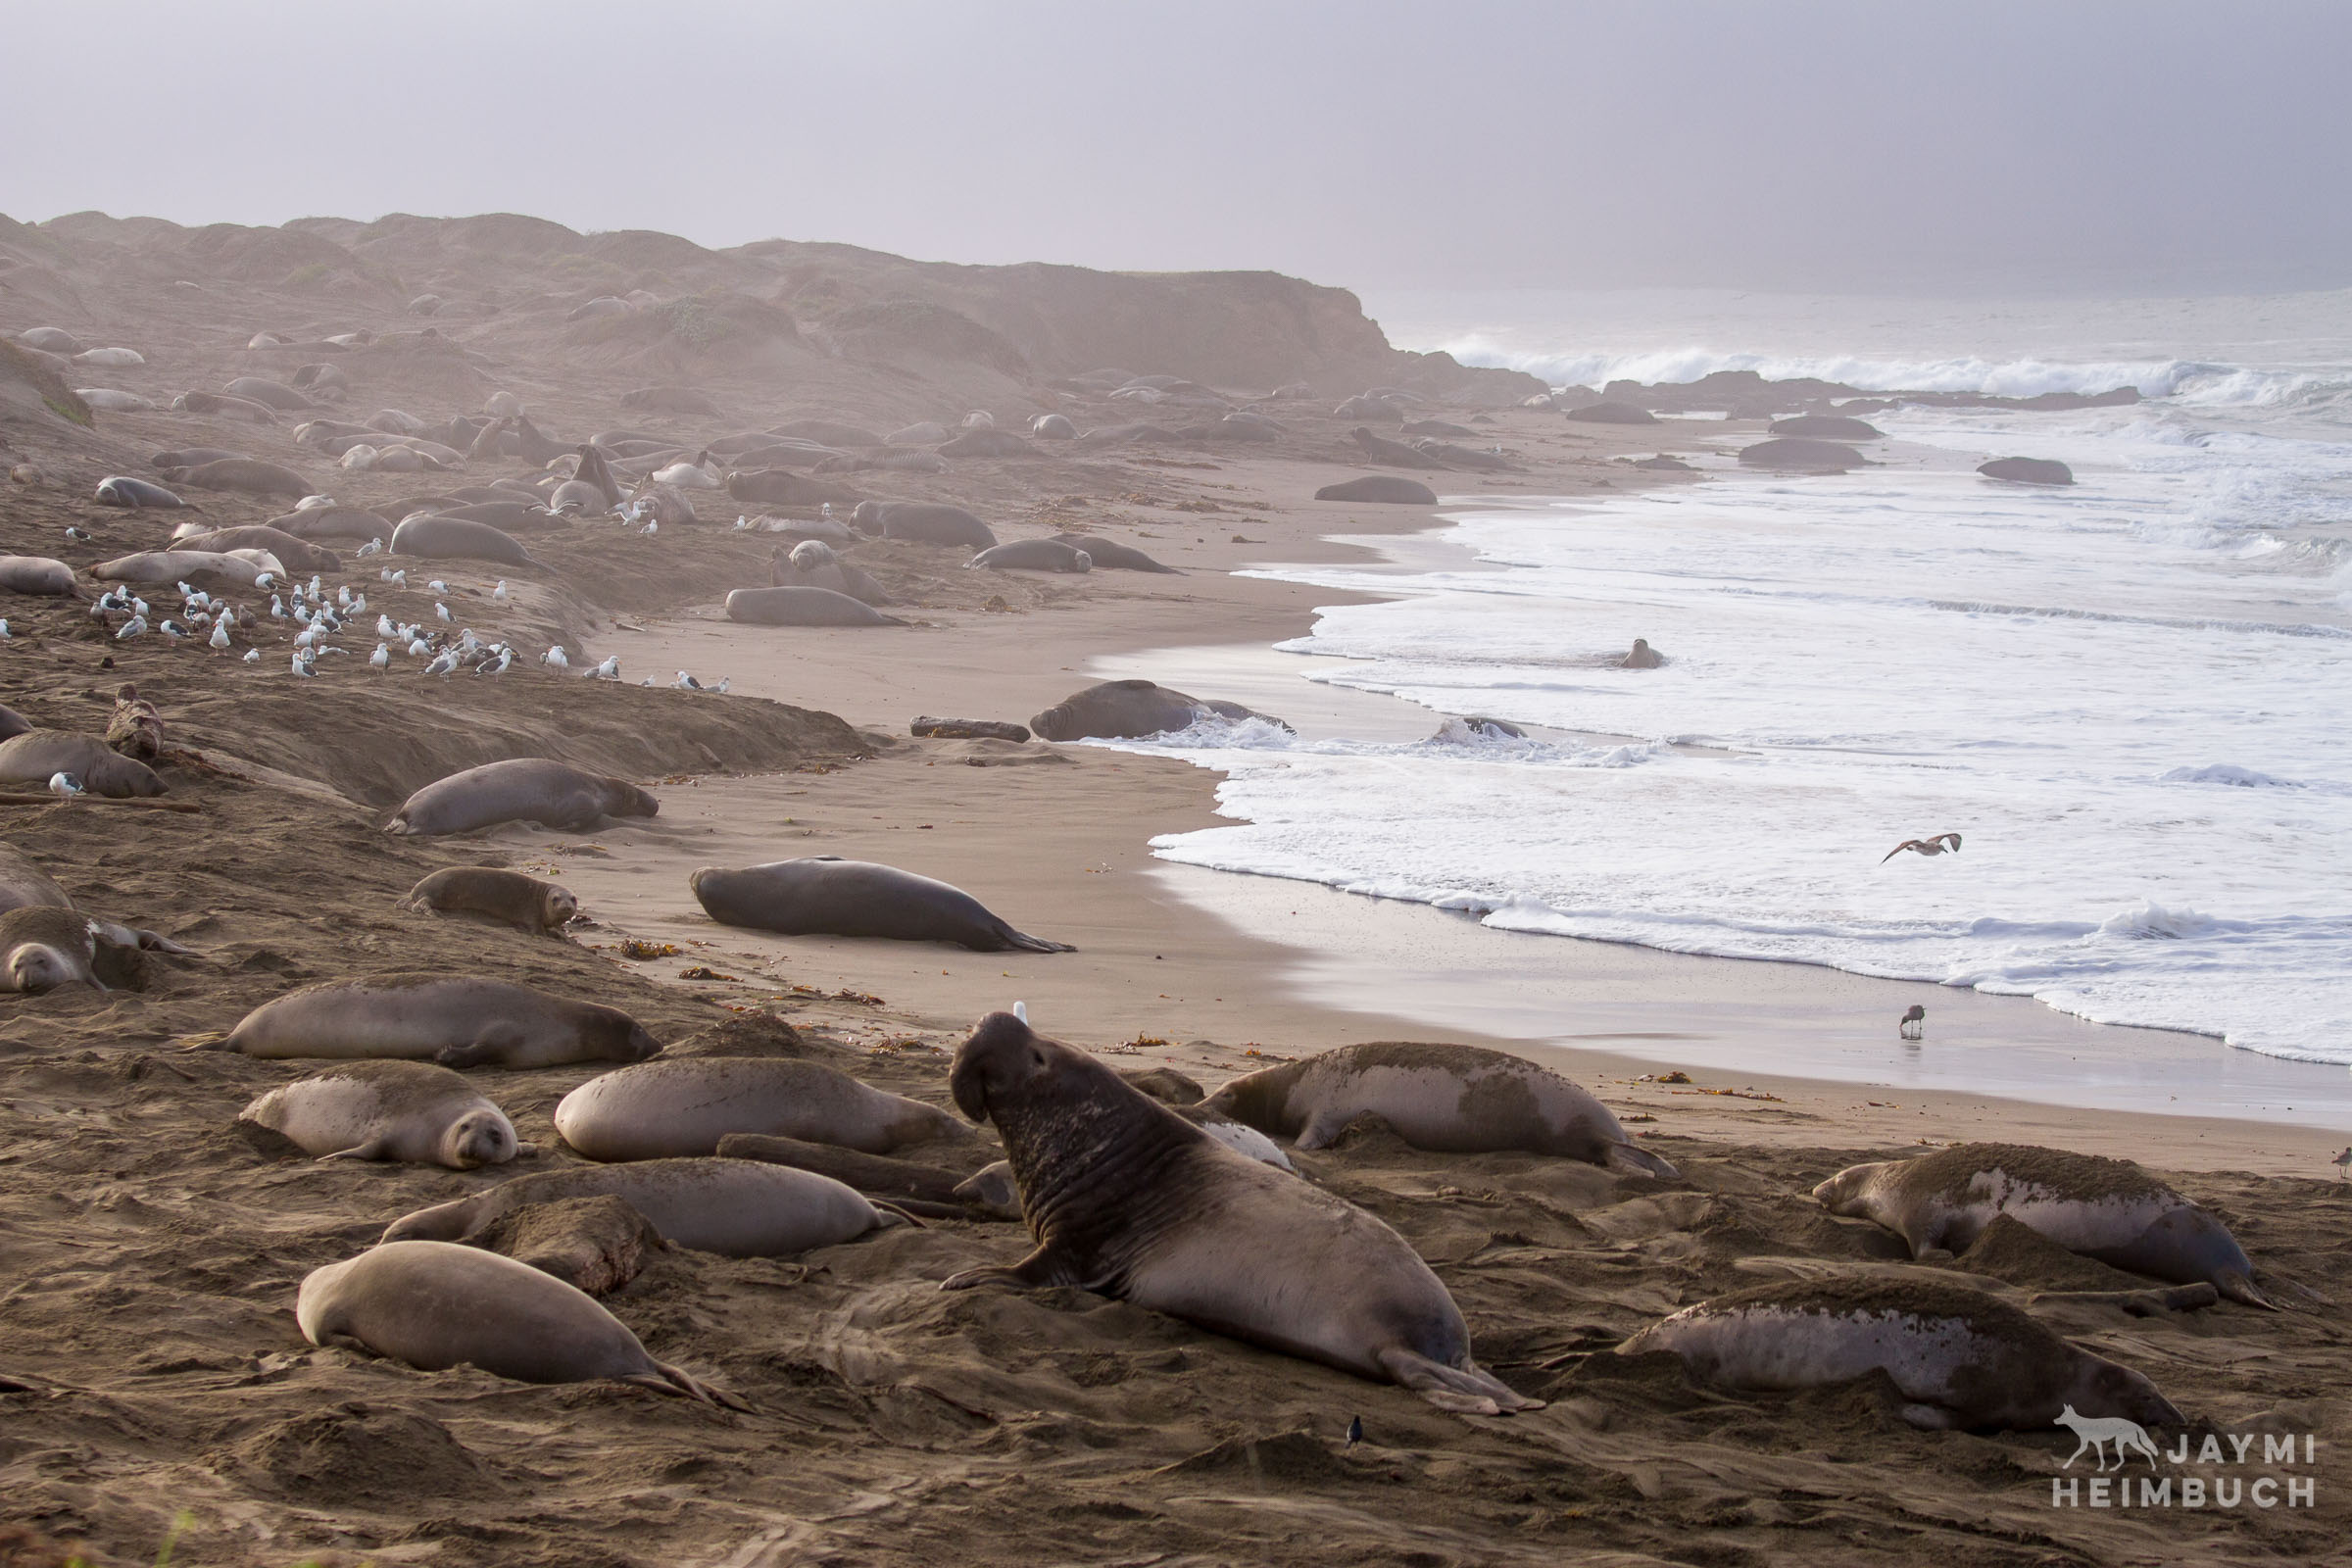 Northern elephant seals on a beach, piedras blancas, california